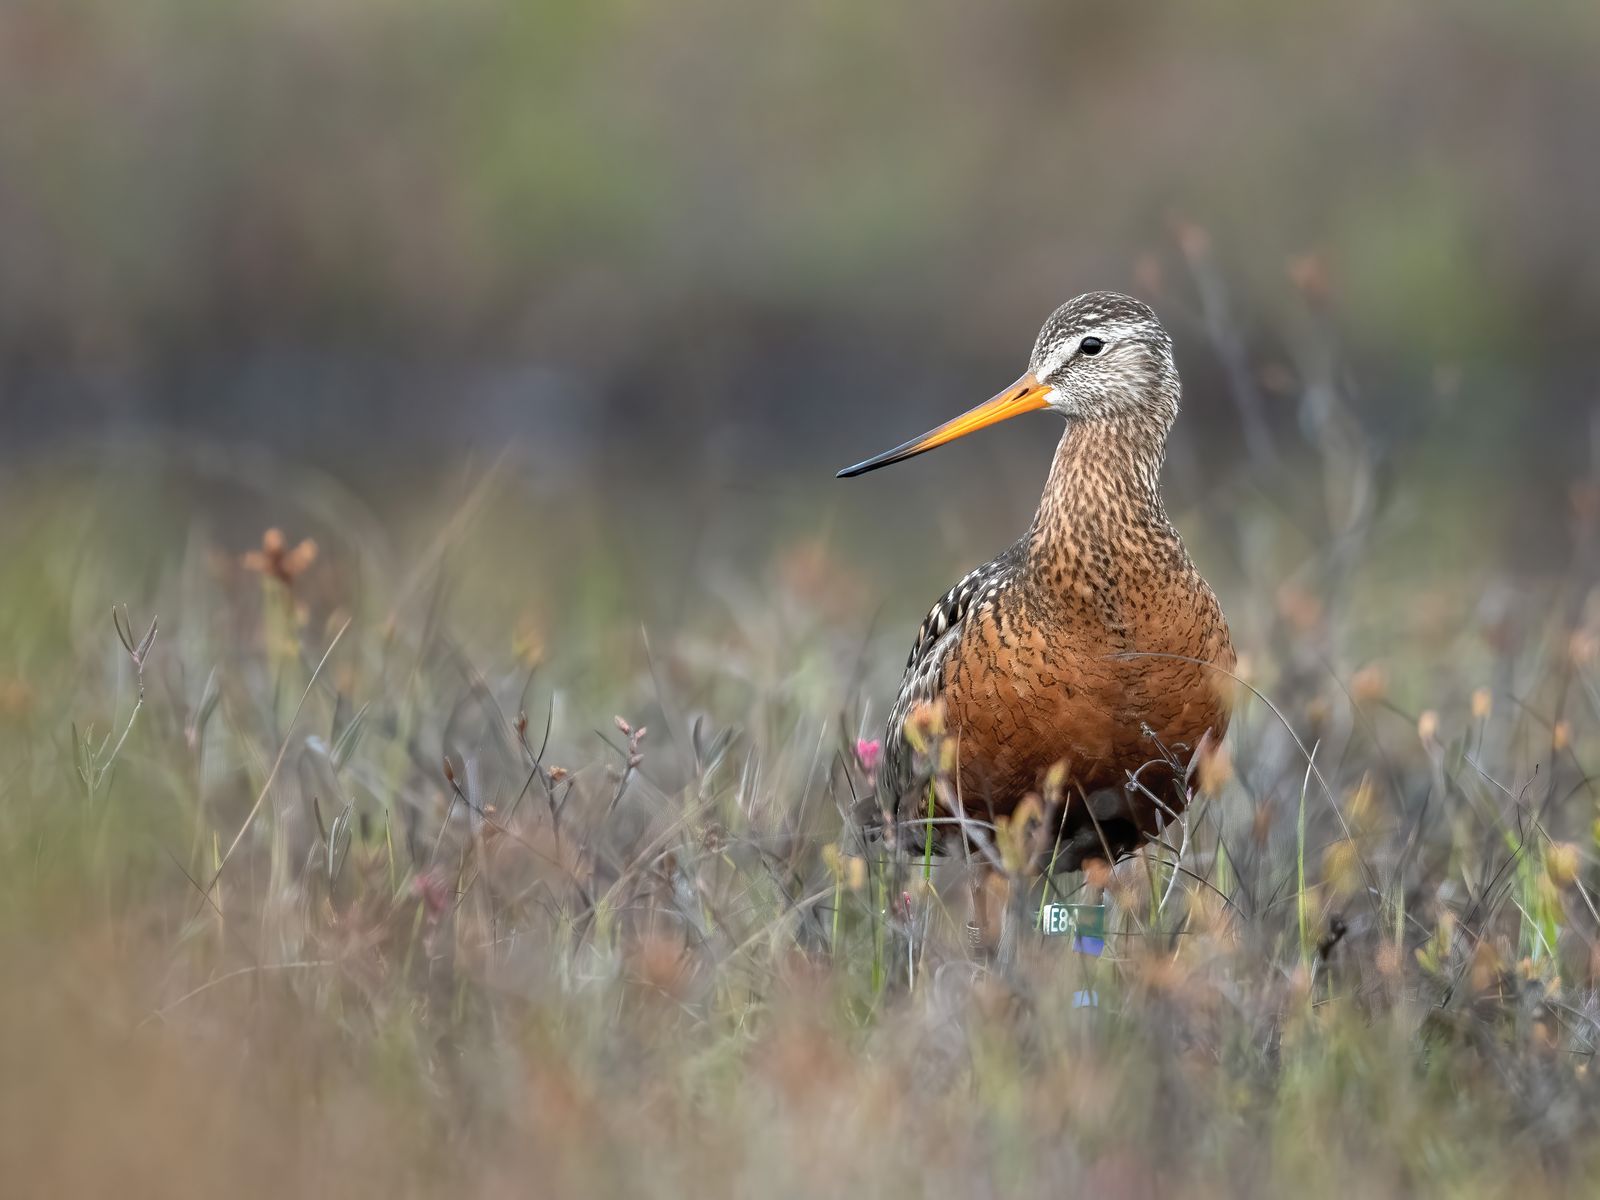 List of bird of prey species recorded at the wetlands.